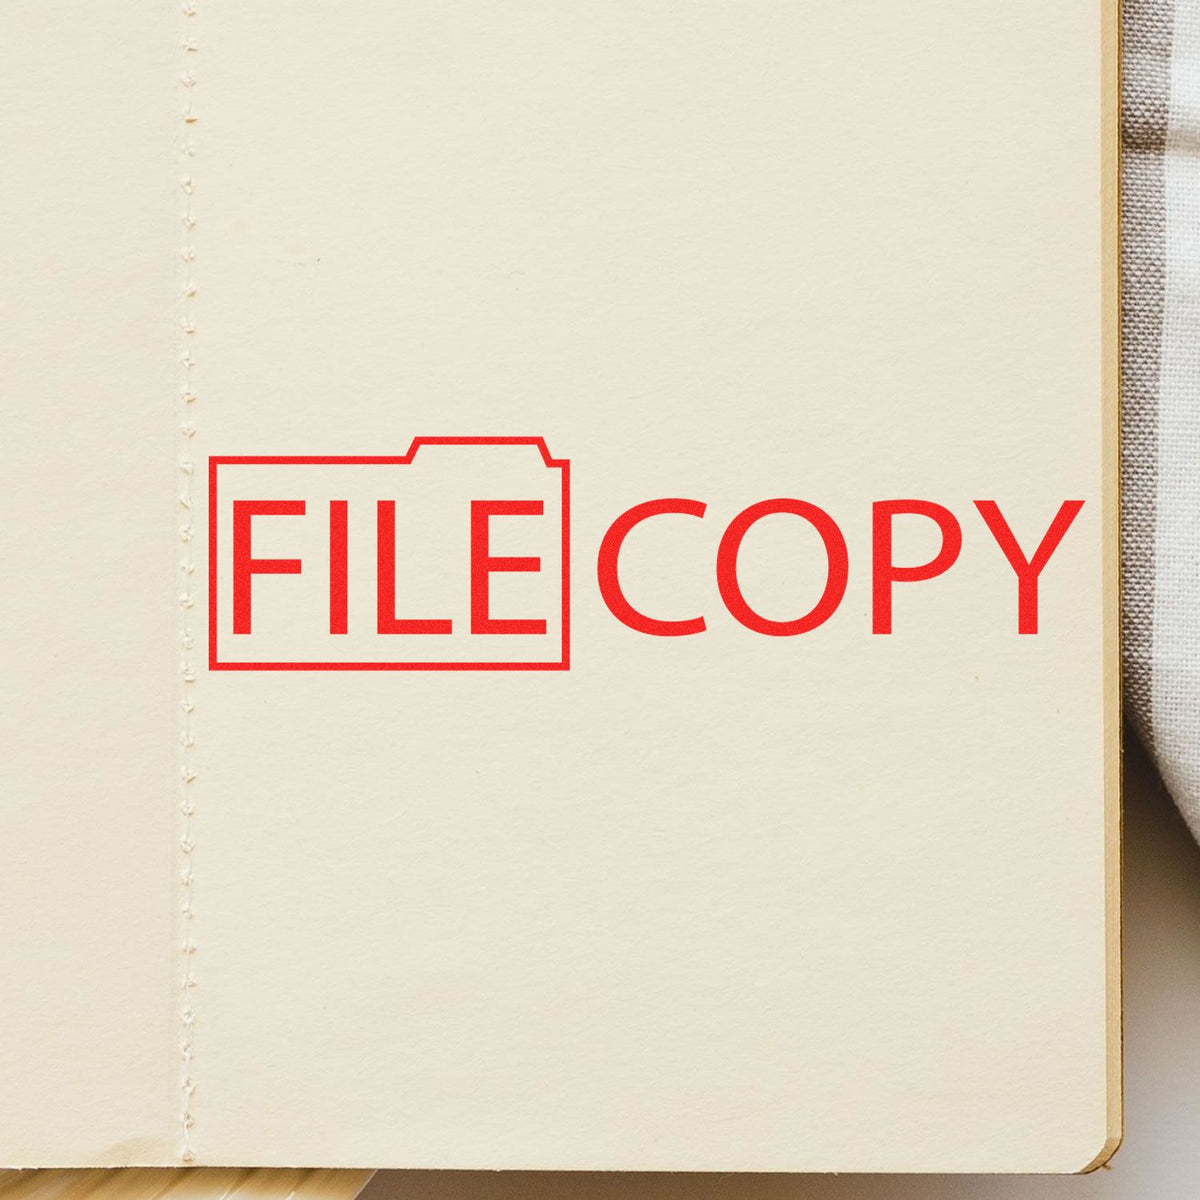 Slim Pre-Inked File Copy with Folder Stamp In Use Photo